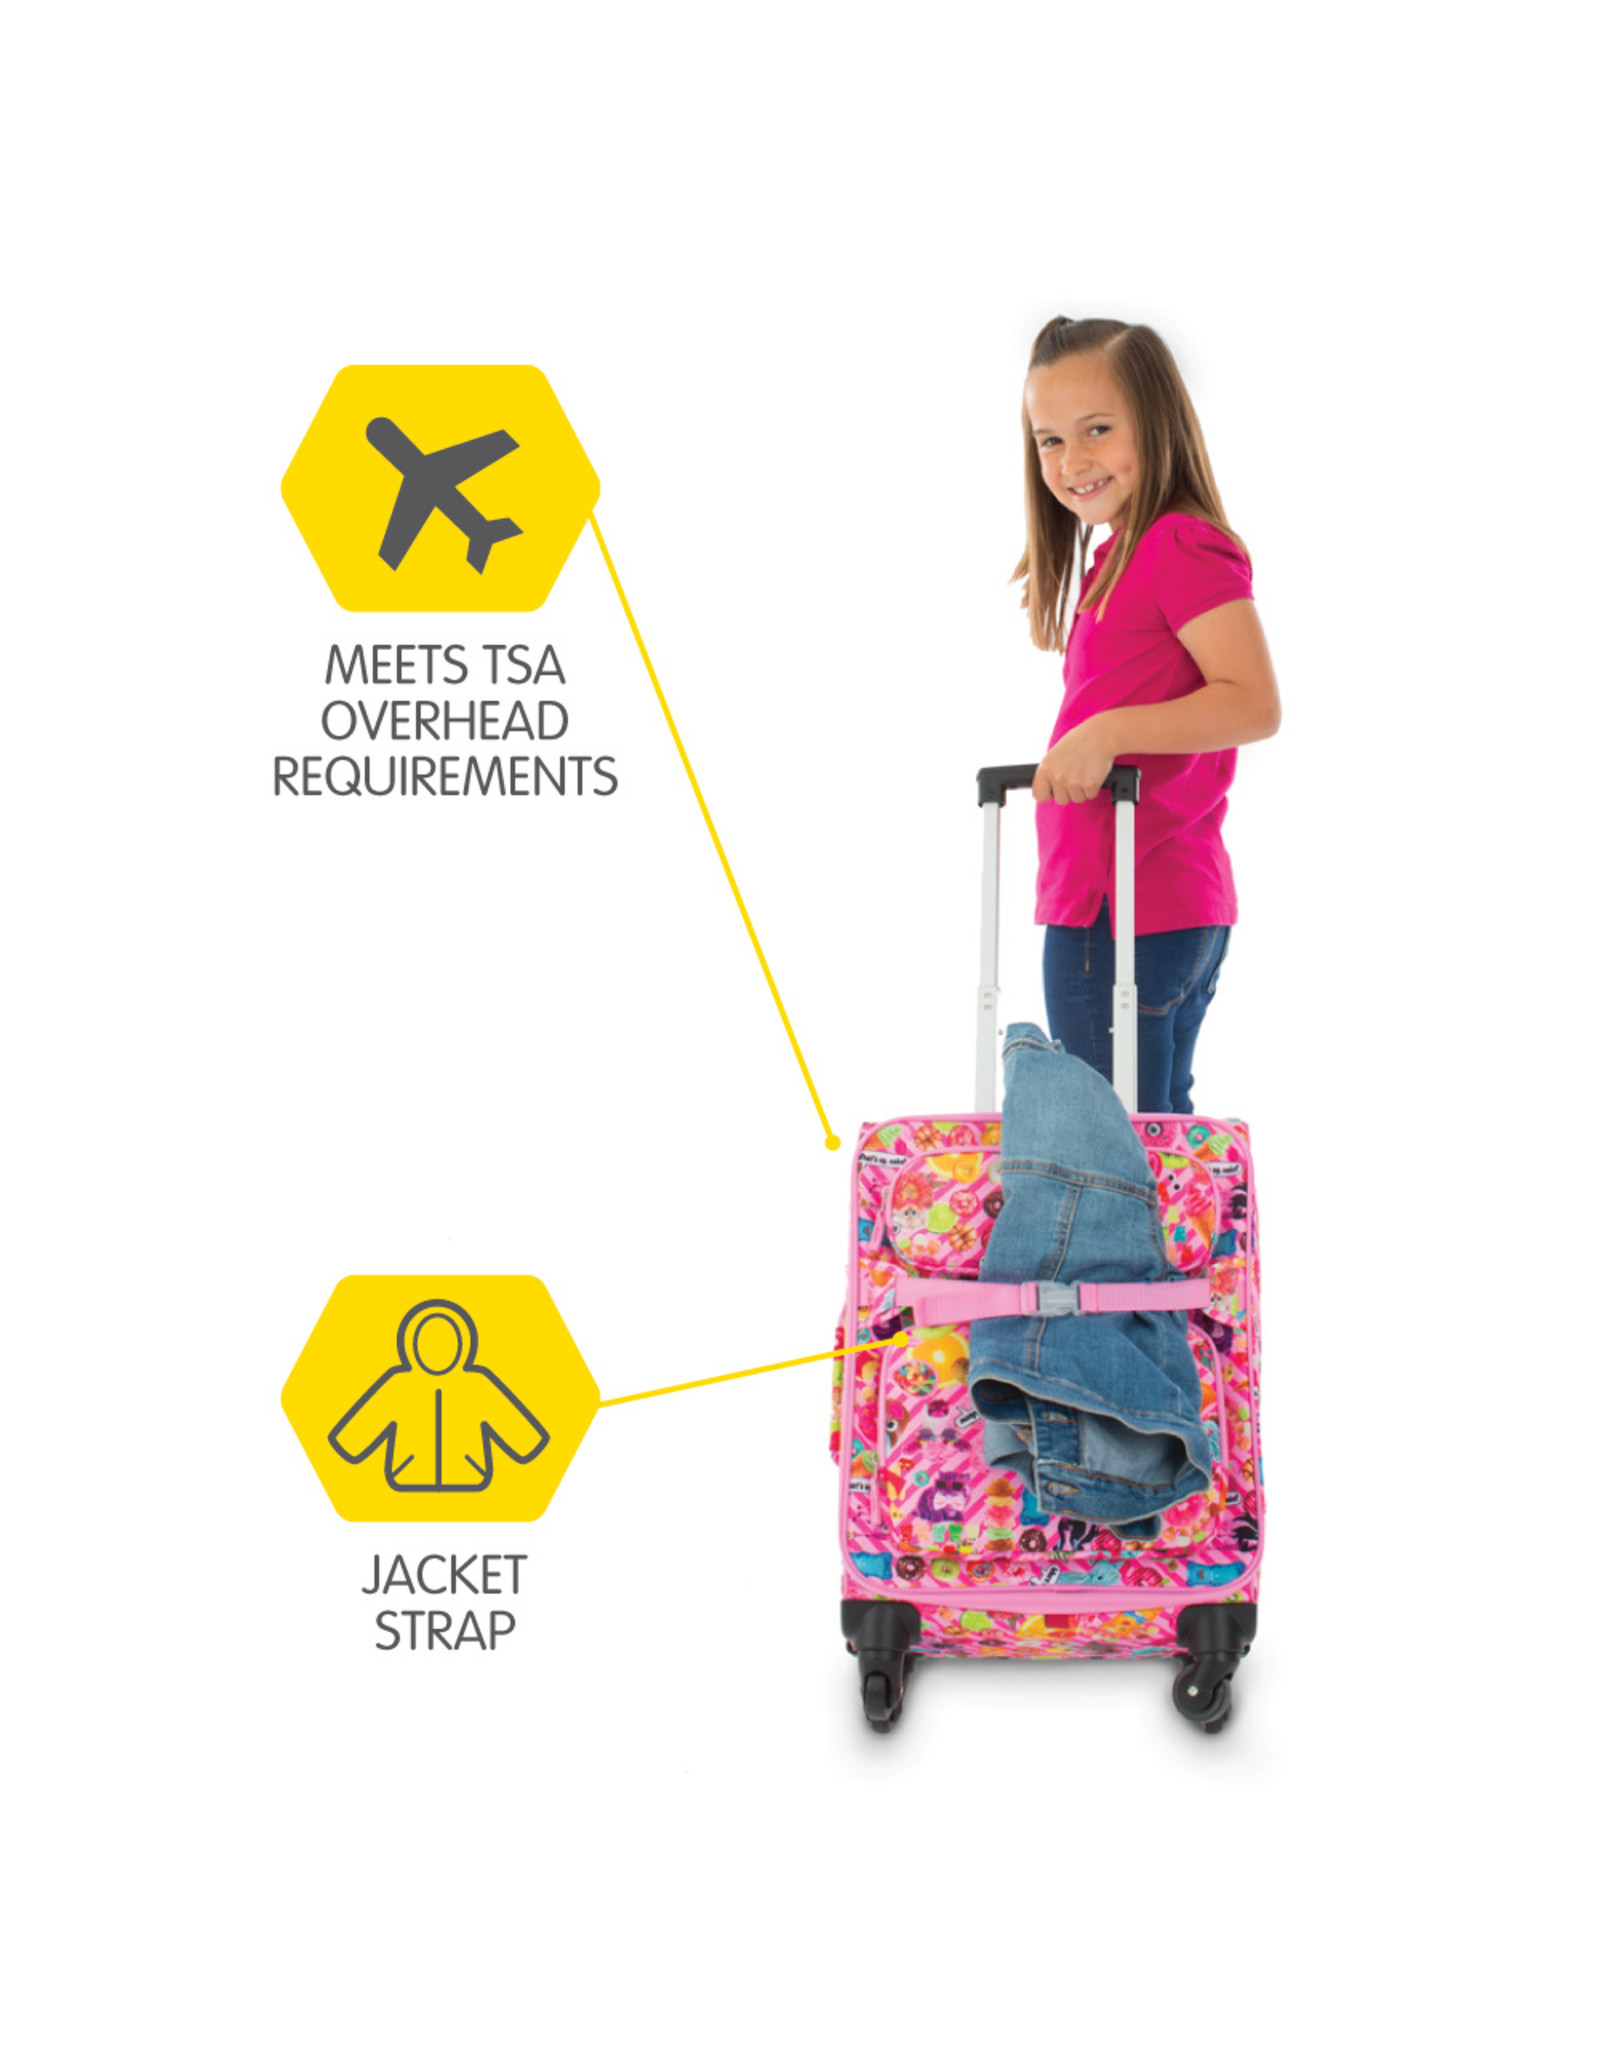 Bixbee Funtastical Traveler Luggage